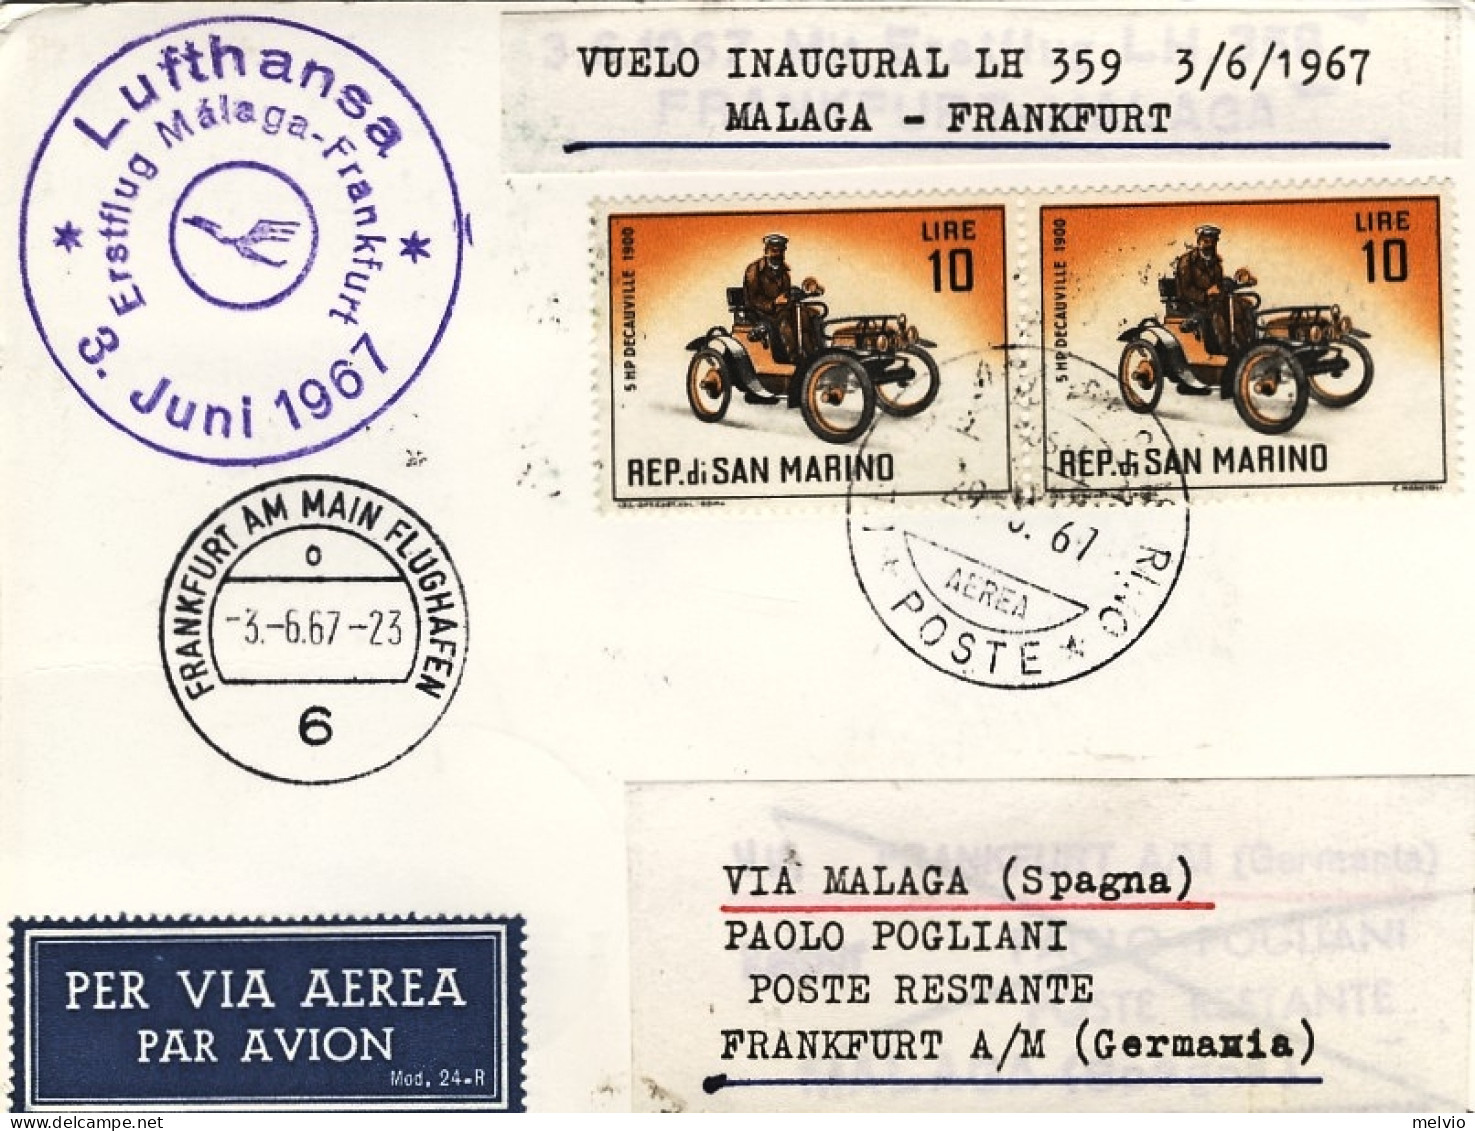 San Marino-1967 I^volo Lufthansa Malaga (Spagna) Francoforte - Luchtpost